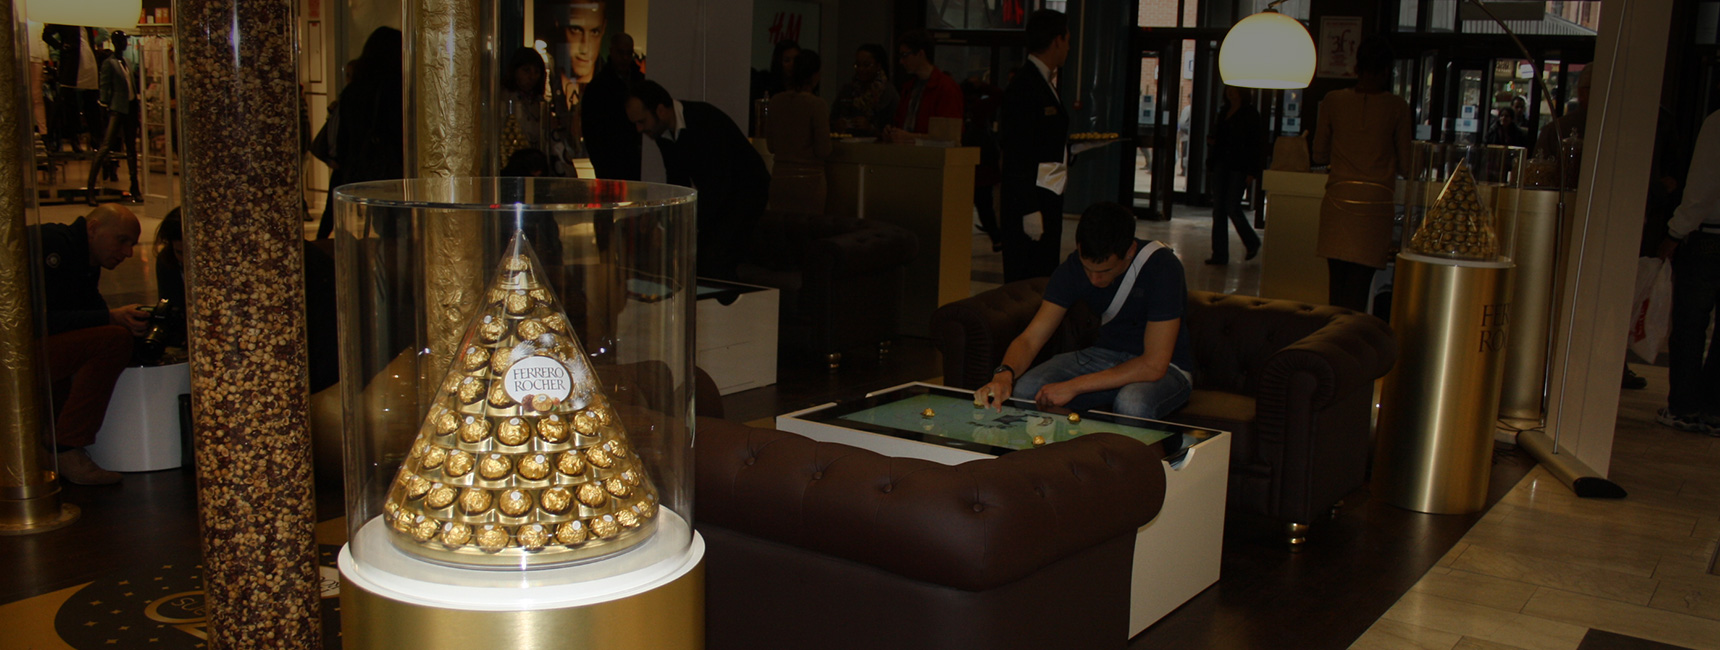 Immersion virtuelle avec Ferrero - Keemia Shopper Marketing - Agence d'activation shopper marketing phygitale